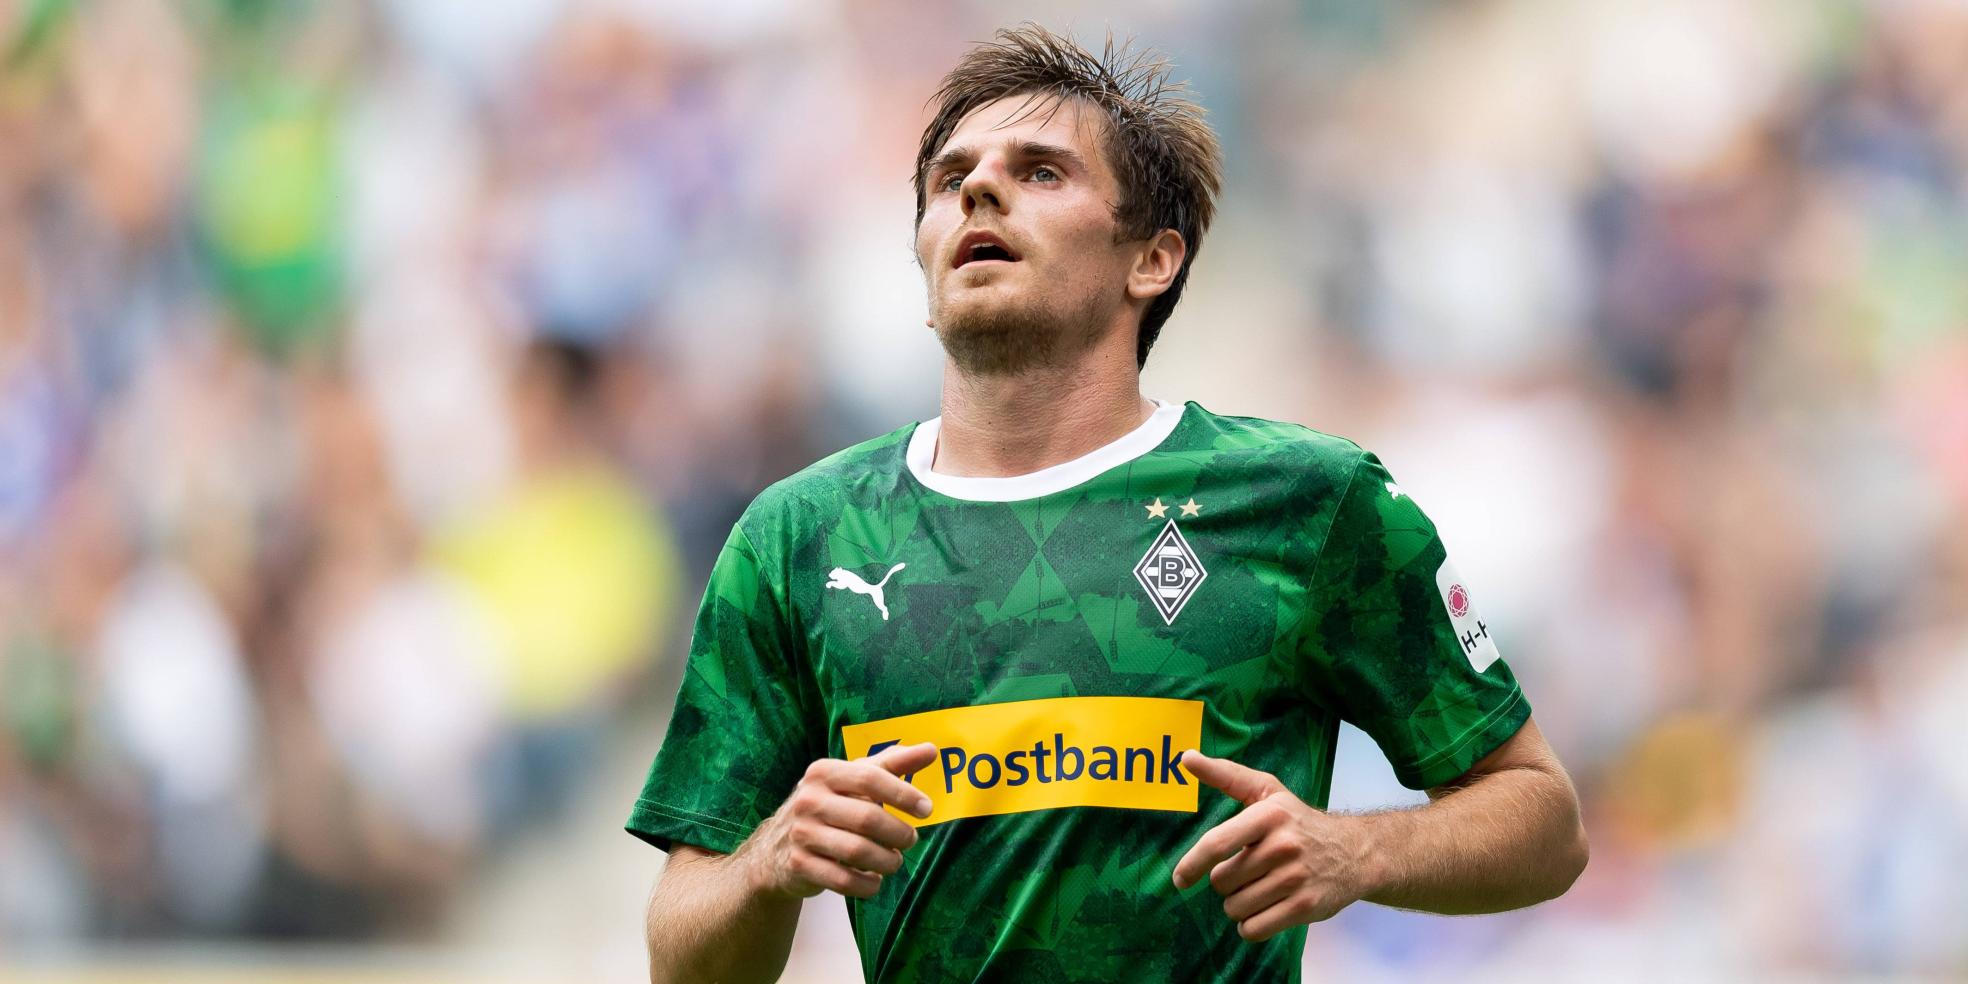 Jonas Hofmann von Borussia Mönchengladbach